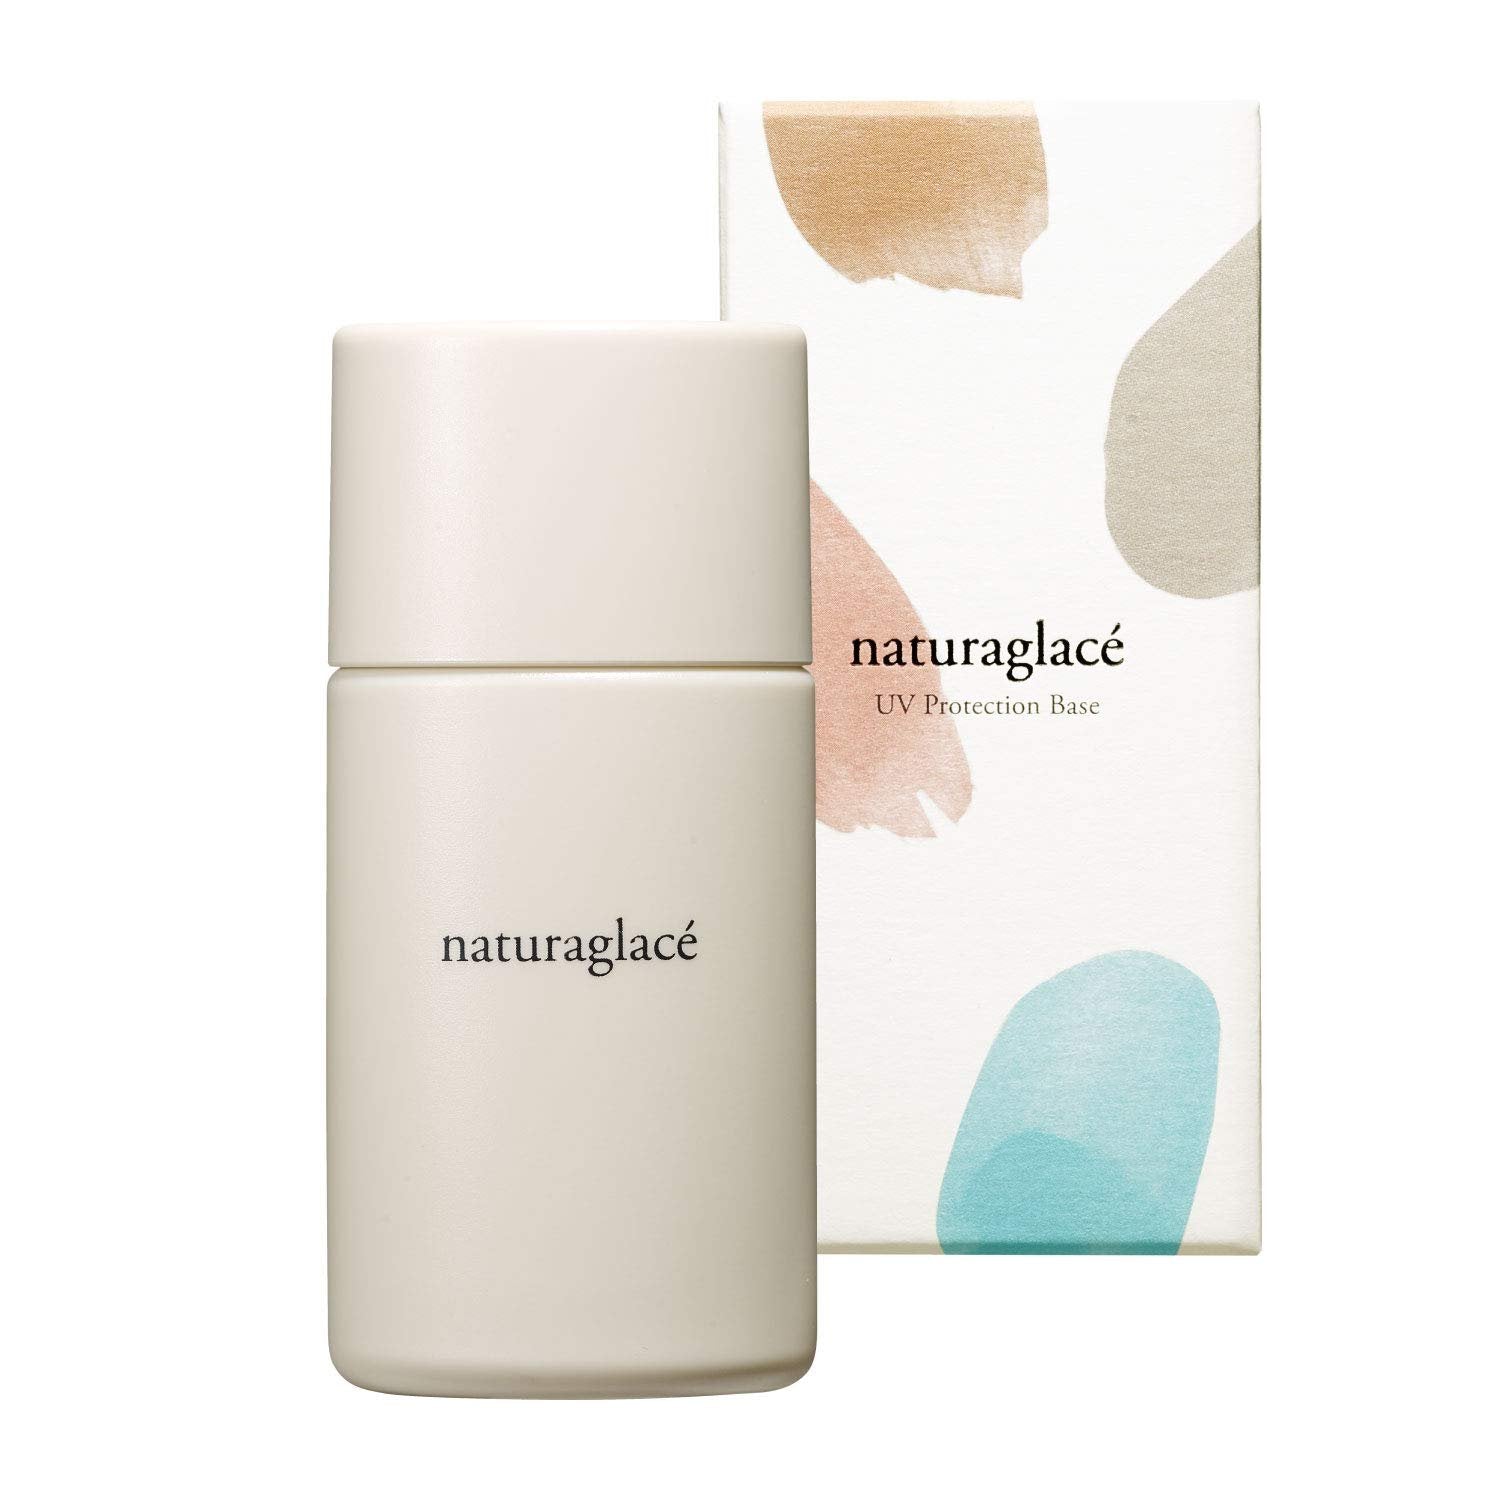 Naturaglace UV Protection Base Naturally Derived Sunscreen SPF50+ 30ml